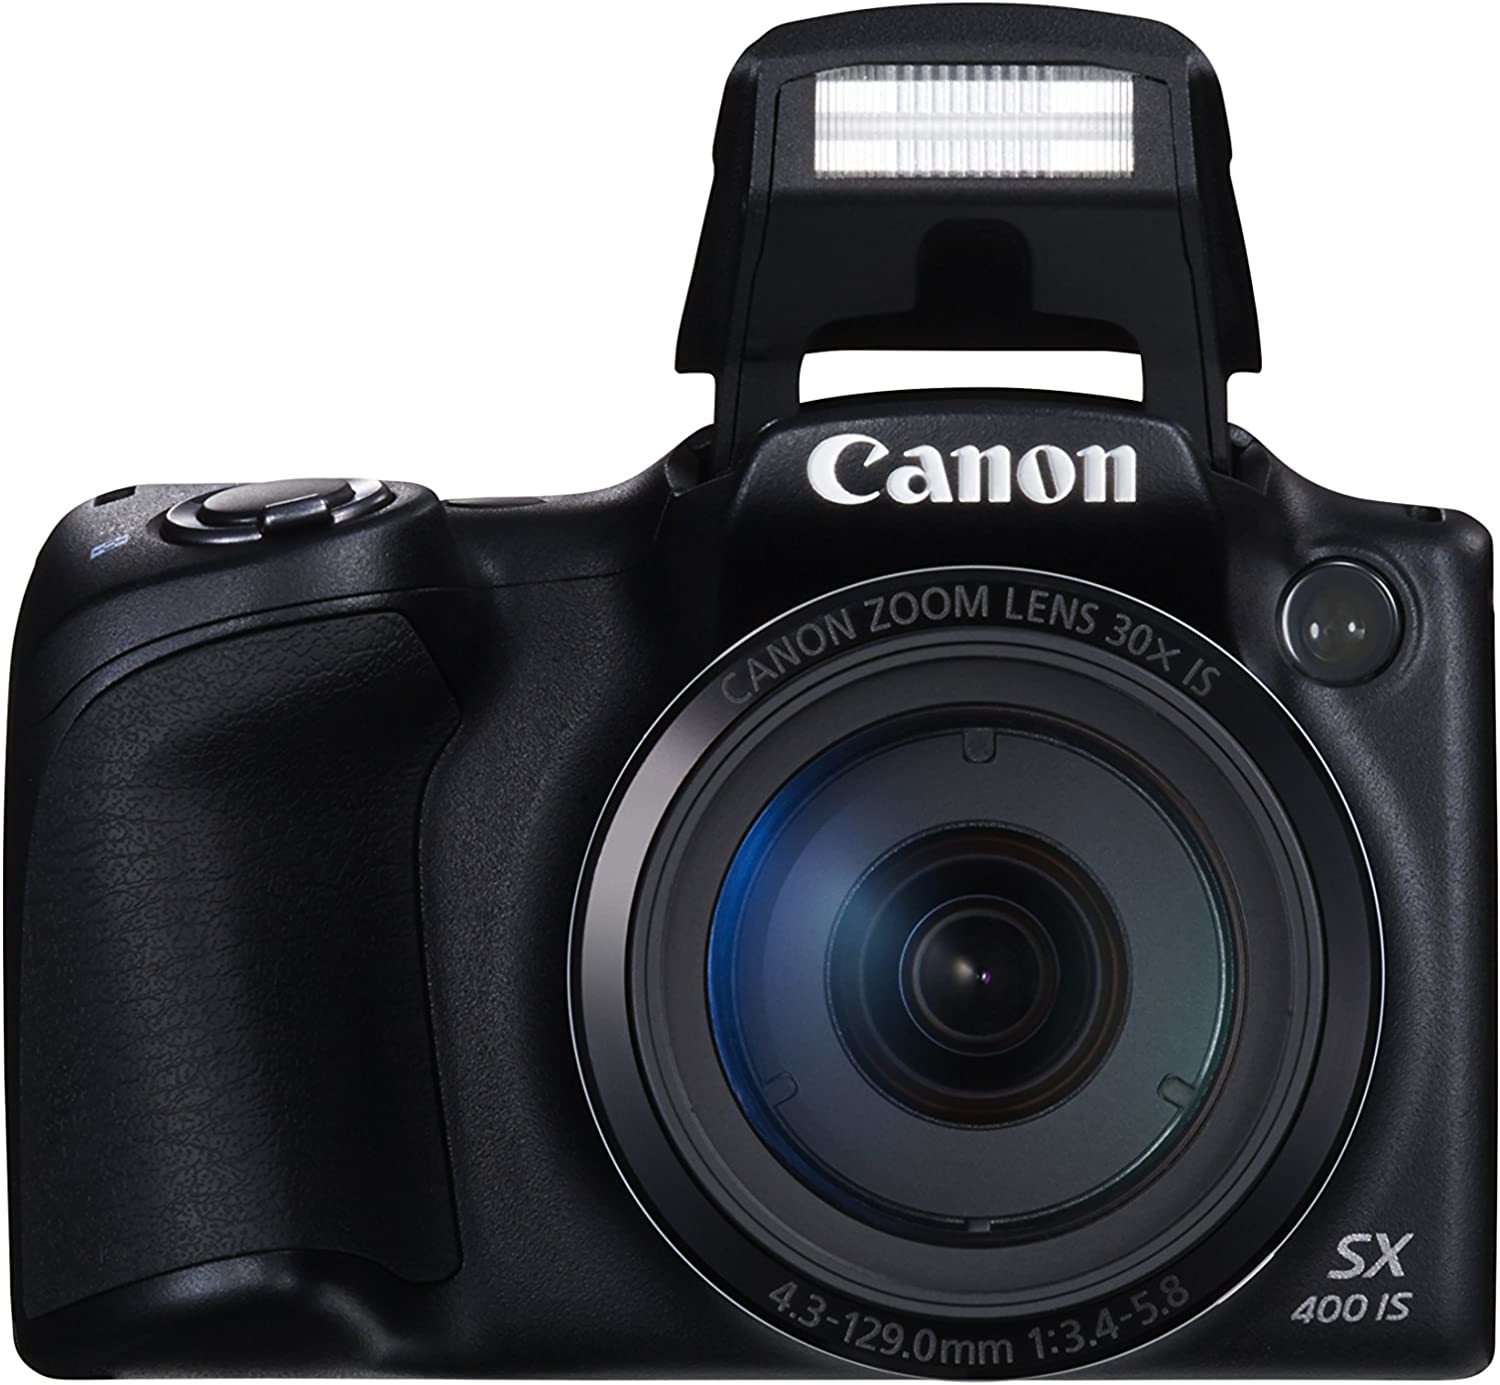  Canon PowerShot SD970IS Cámara digital de 12,1 MP con